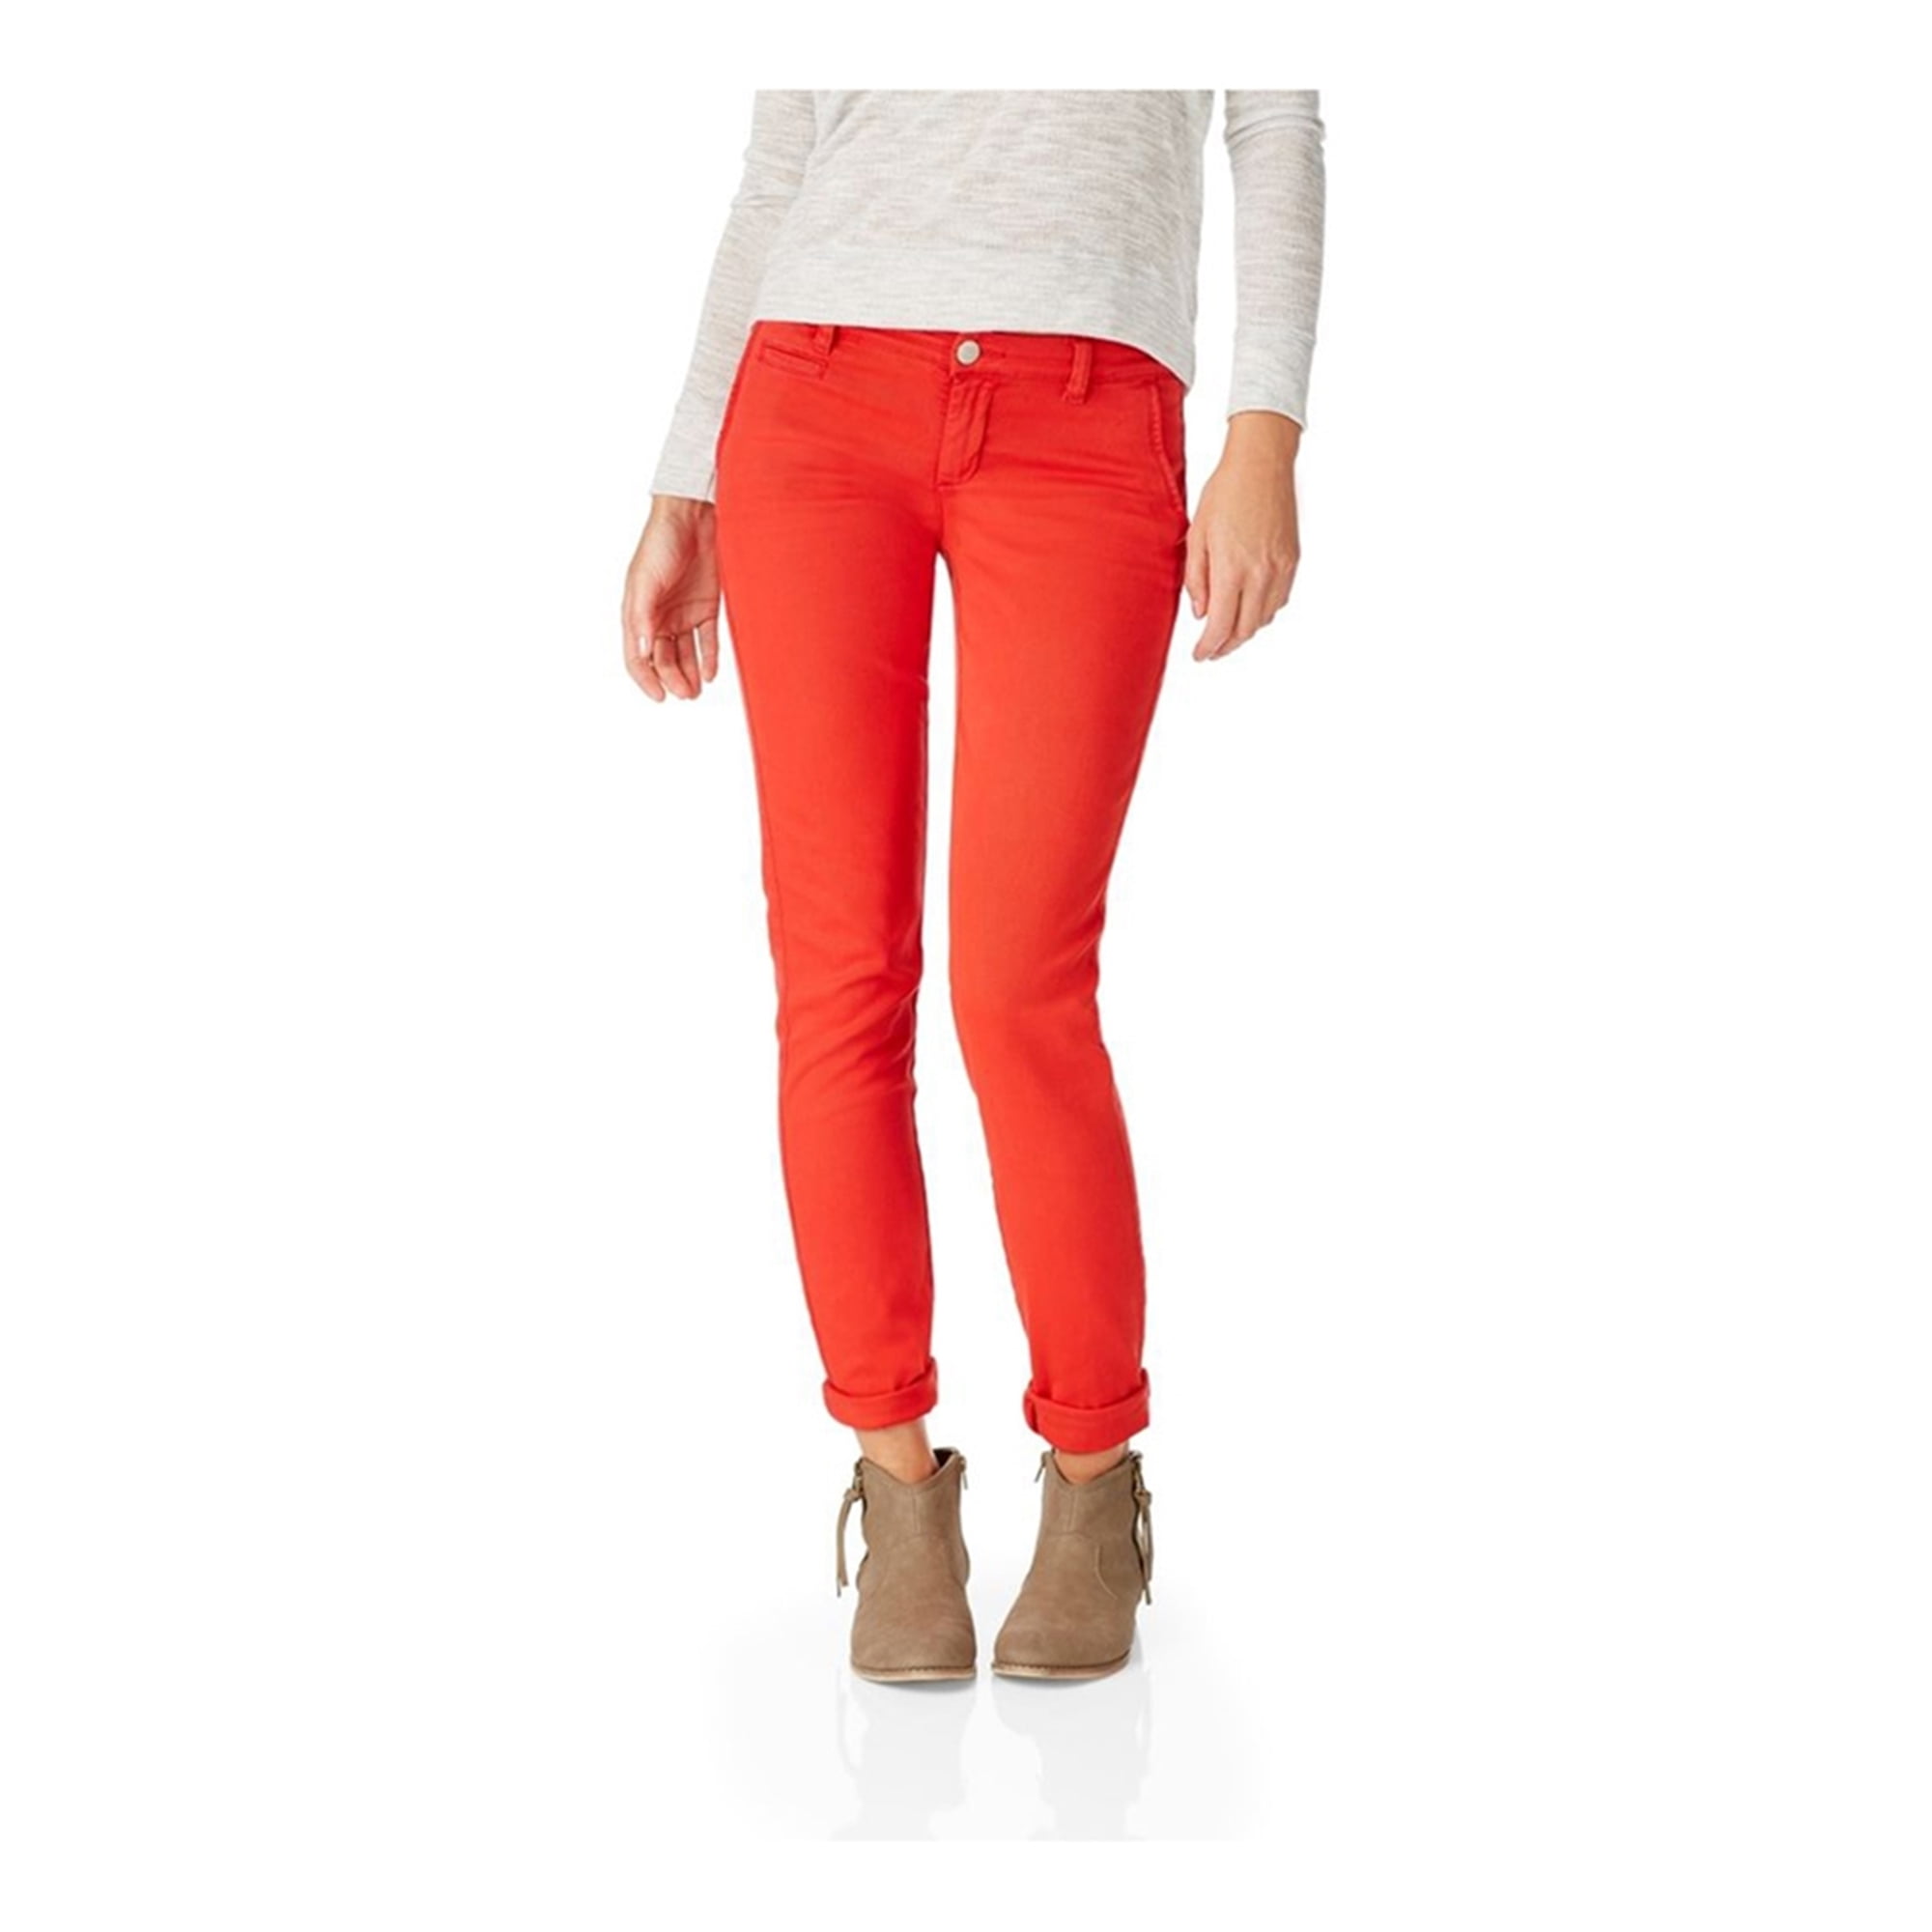 Aeropostale Womens Skinny Twill Casual Trouser Pants, Red, 000 Regular 